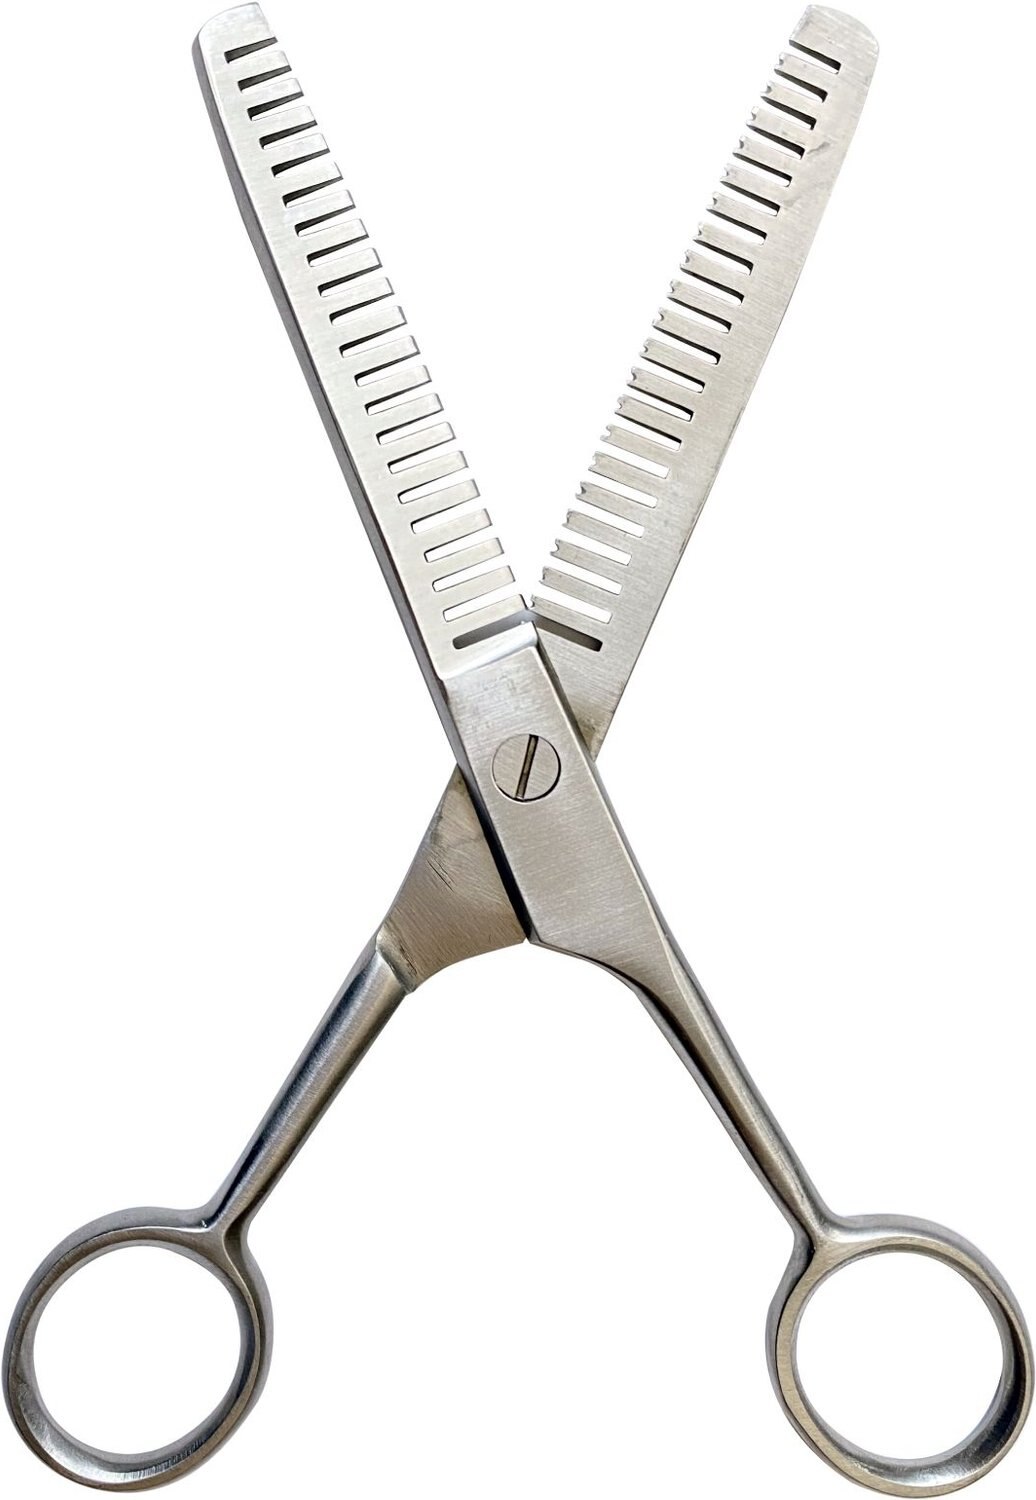 Wahl Smartgroom Pet Grooming Thinning Scissors 6 Inch / 15cm Stainless Steel